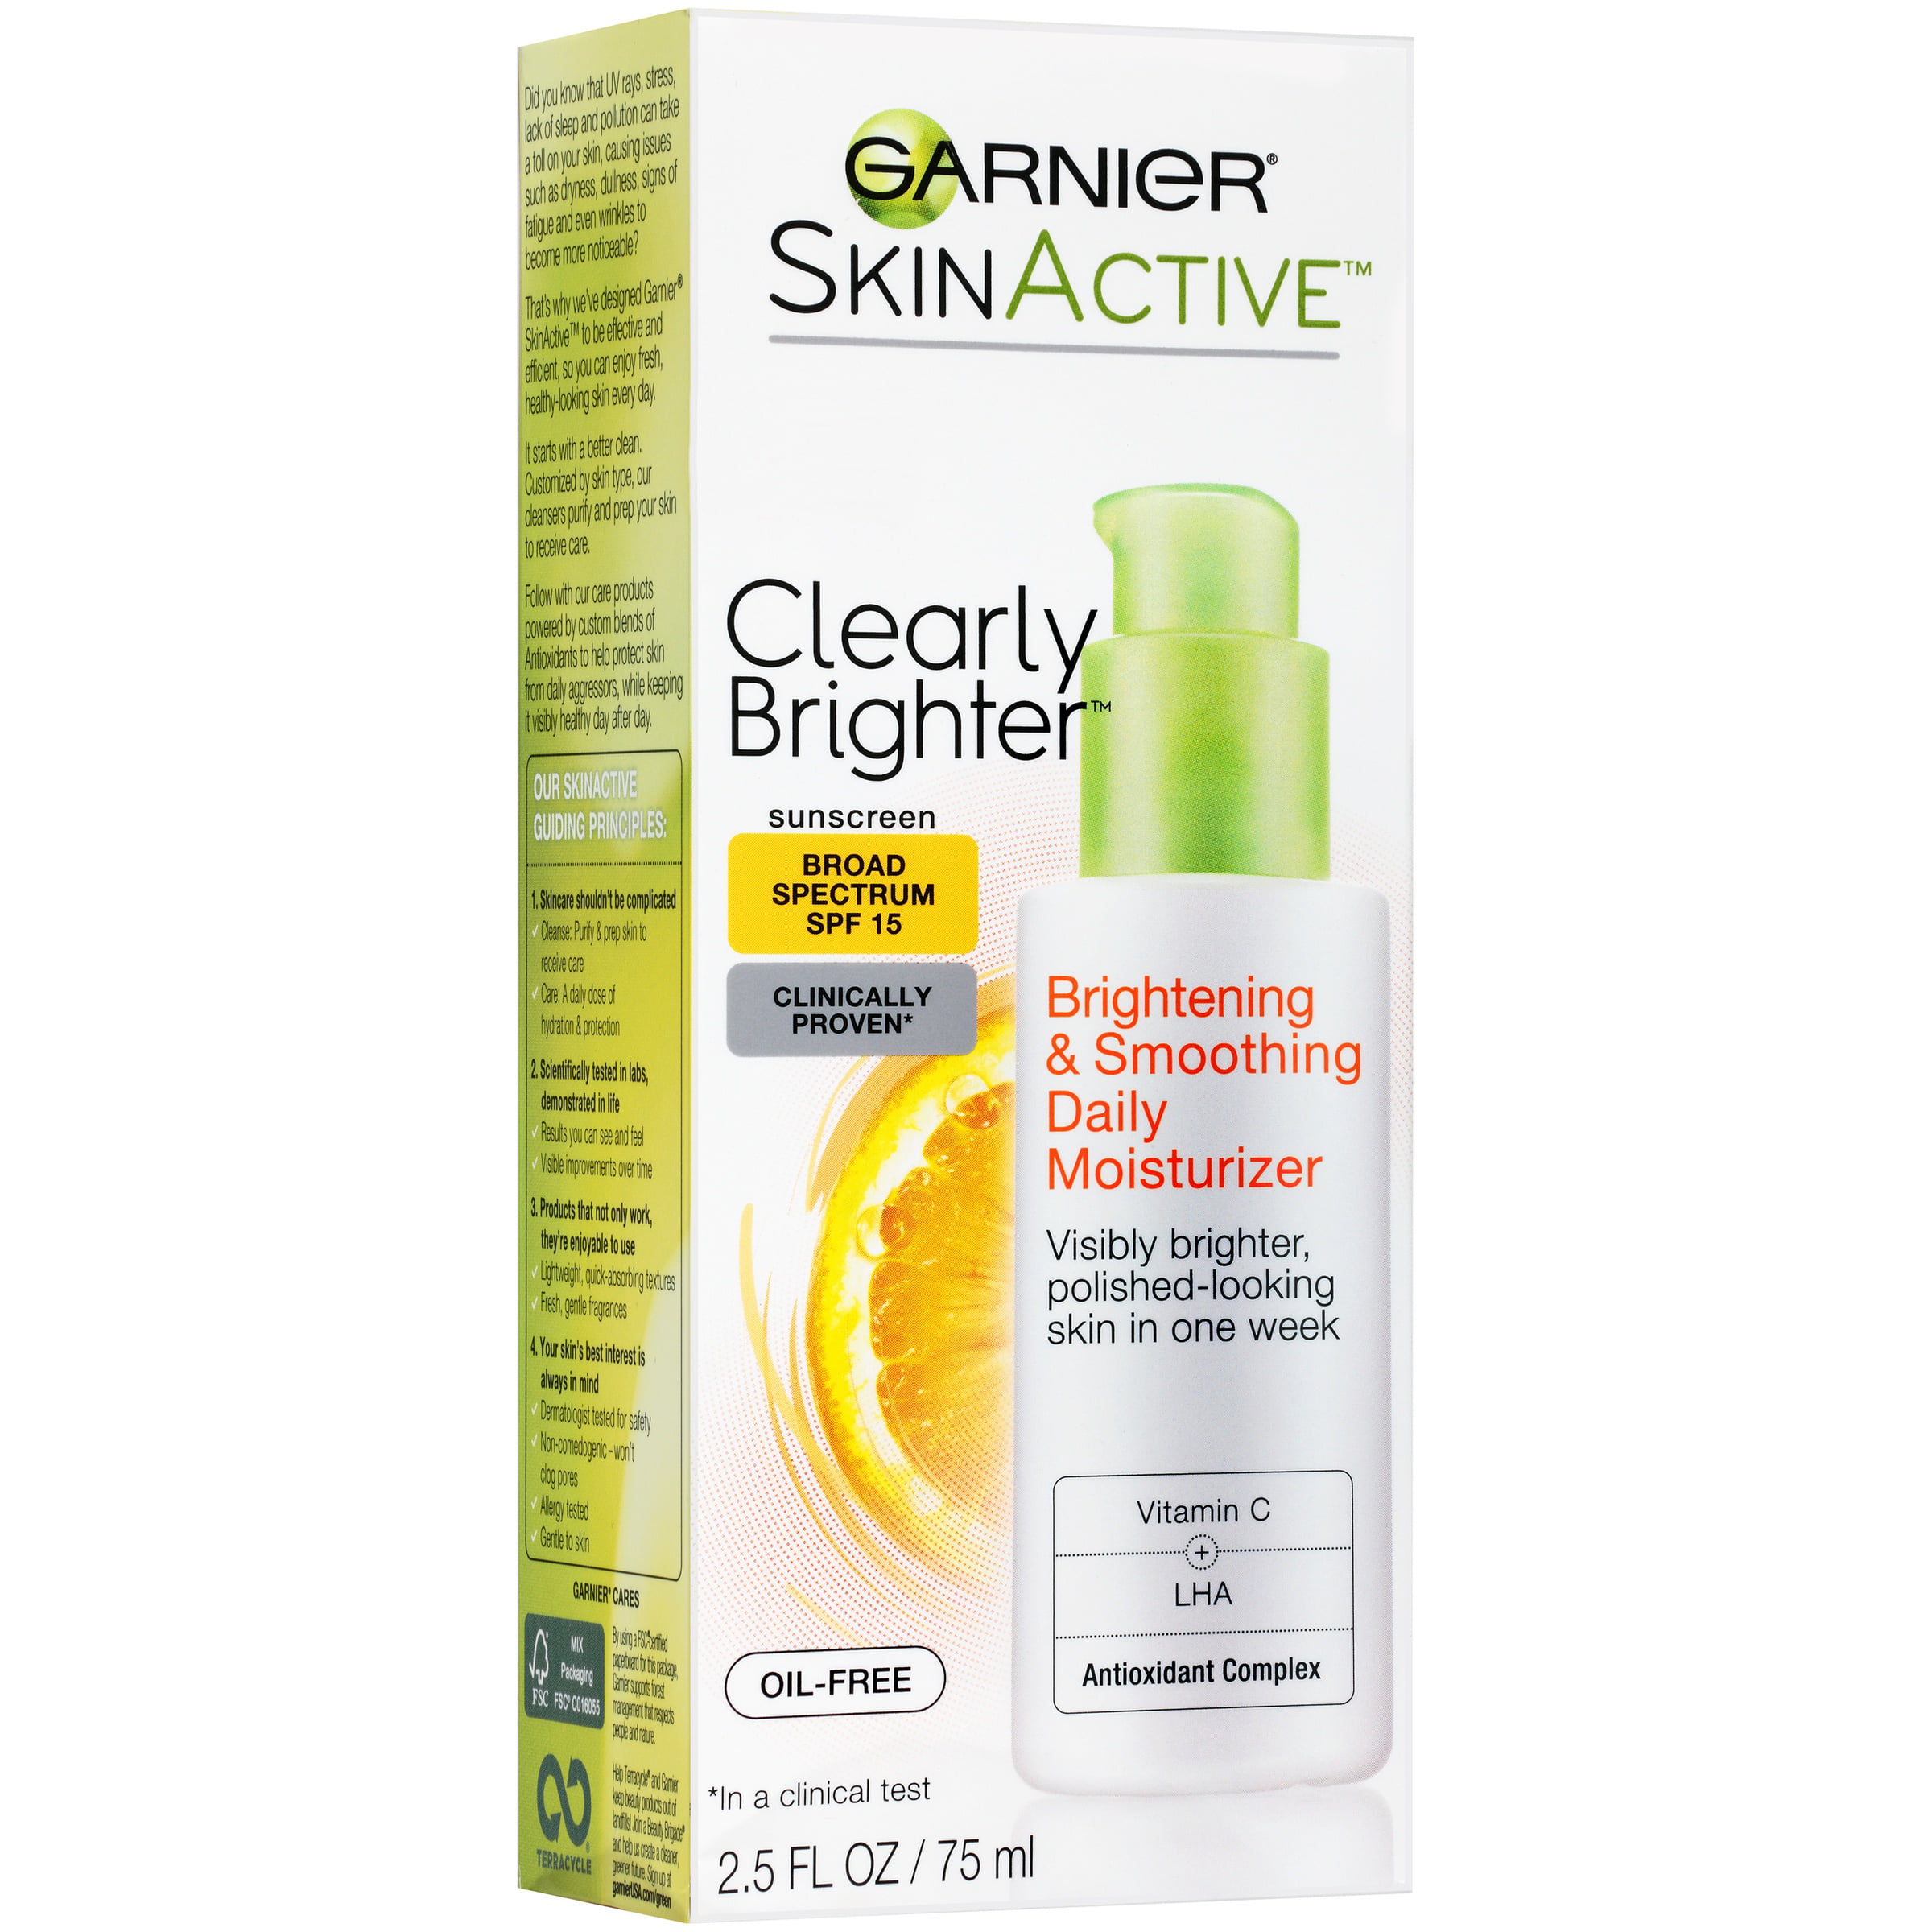 Garnier Skin Active fast Bright. Гарньер СПФ. Garnier Skin Active. Гарньер увлажняющий 30. Clear bright skin